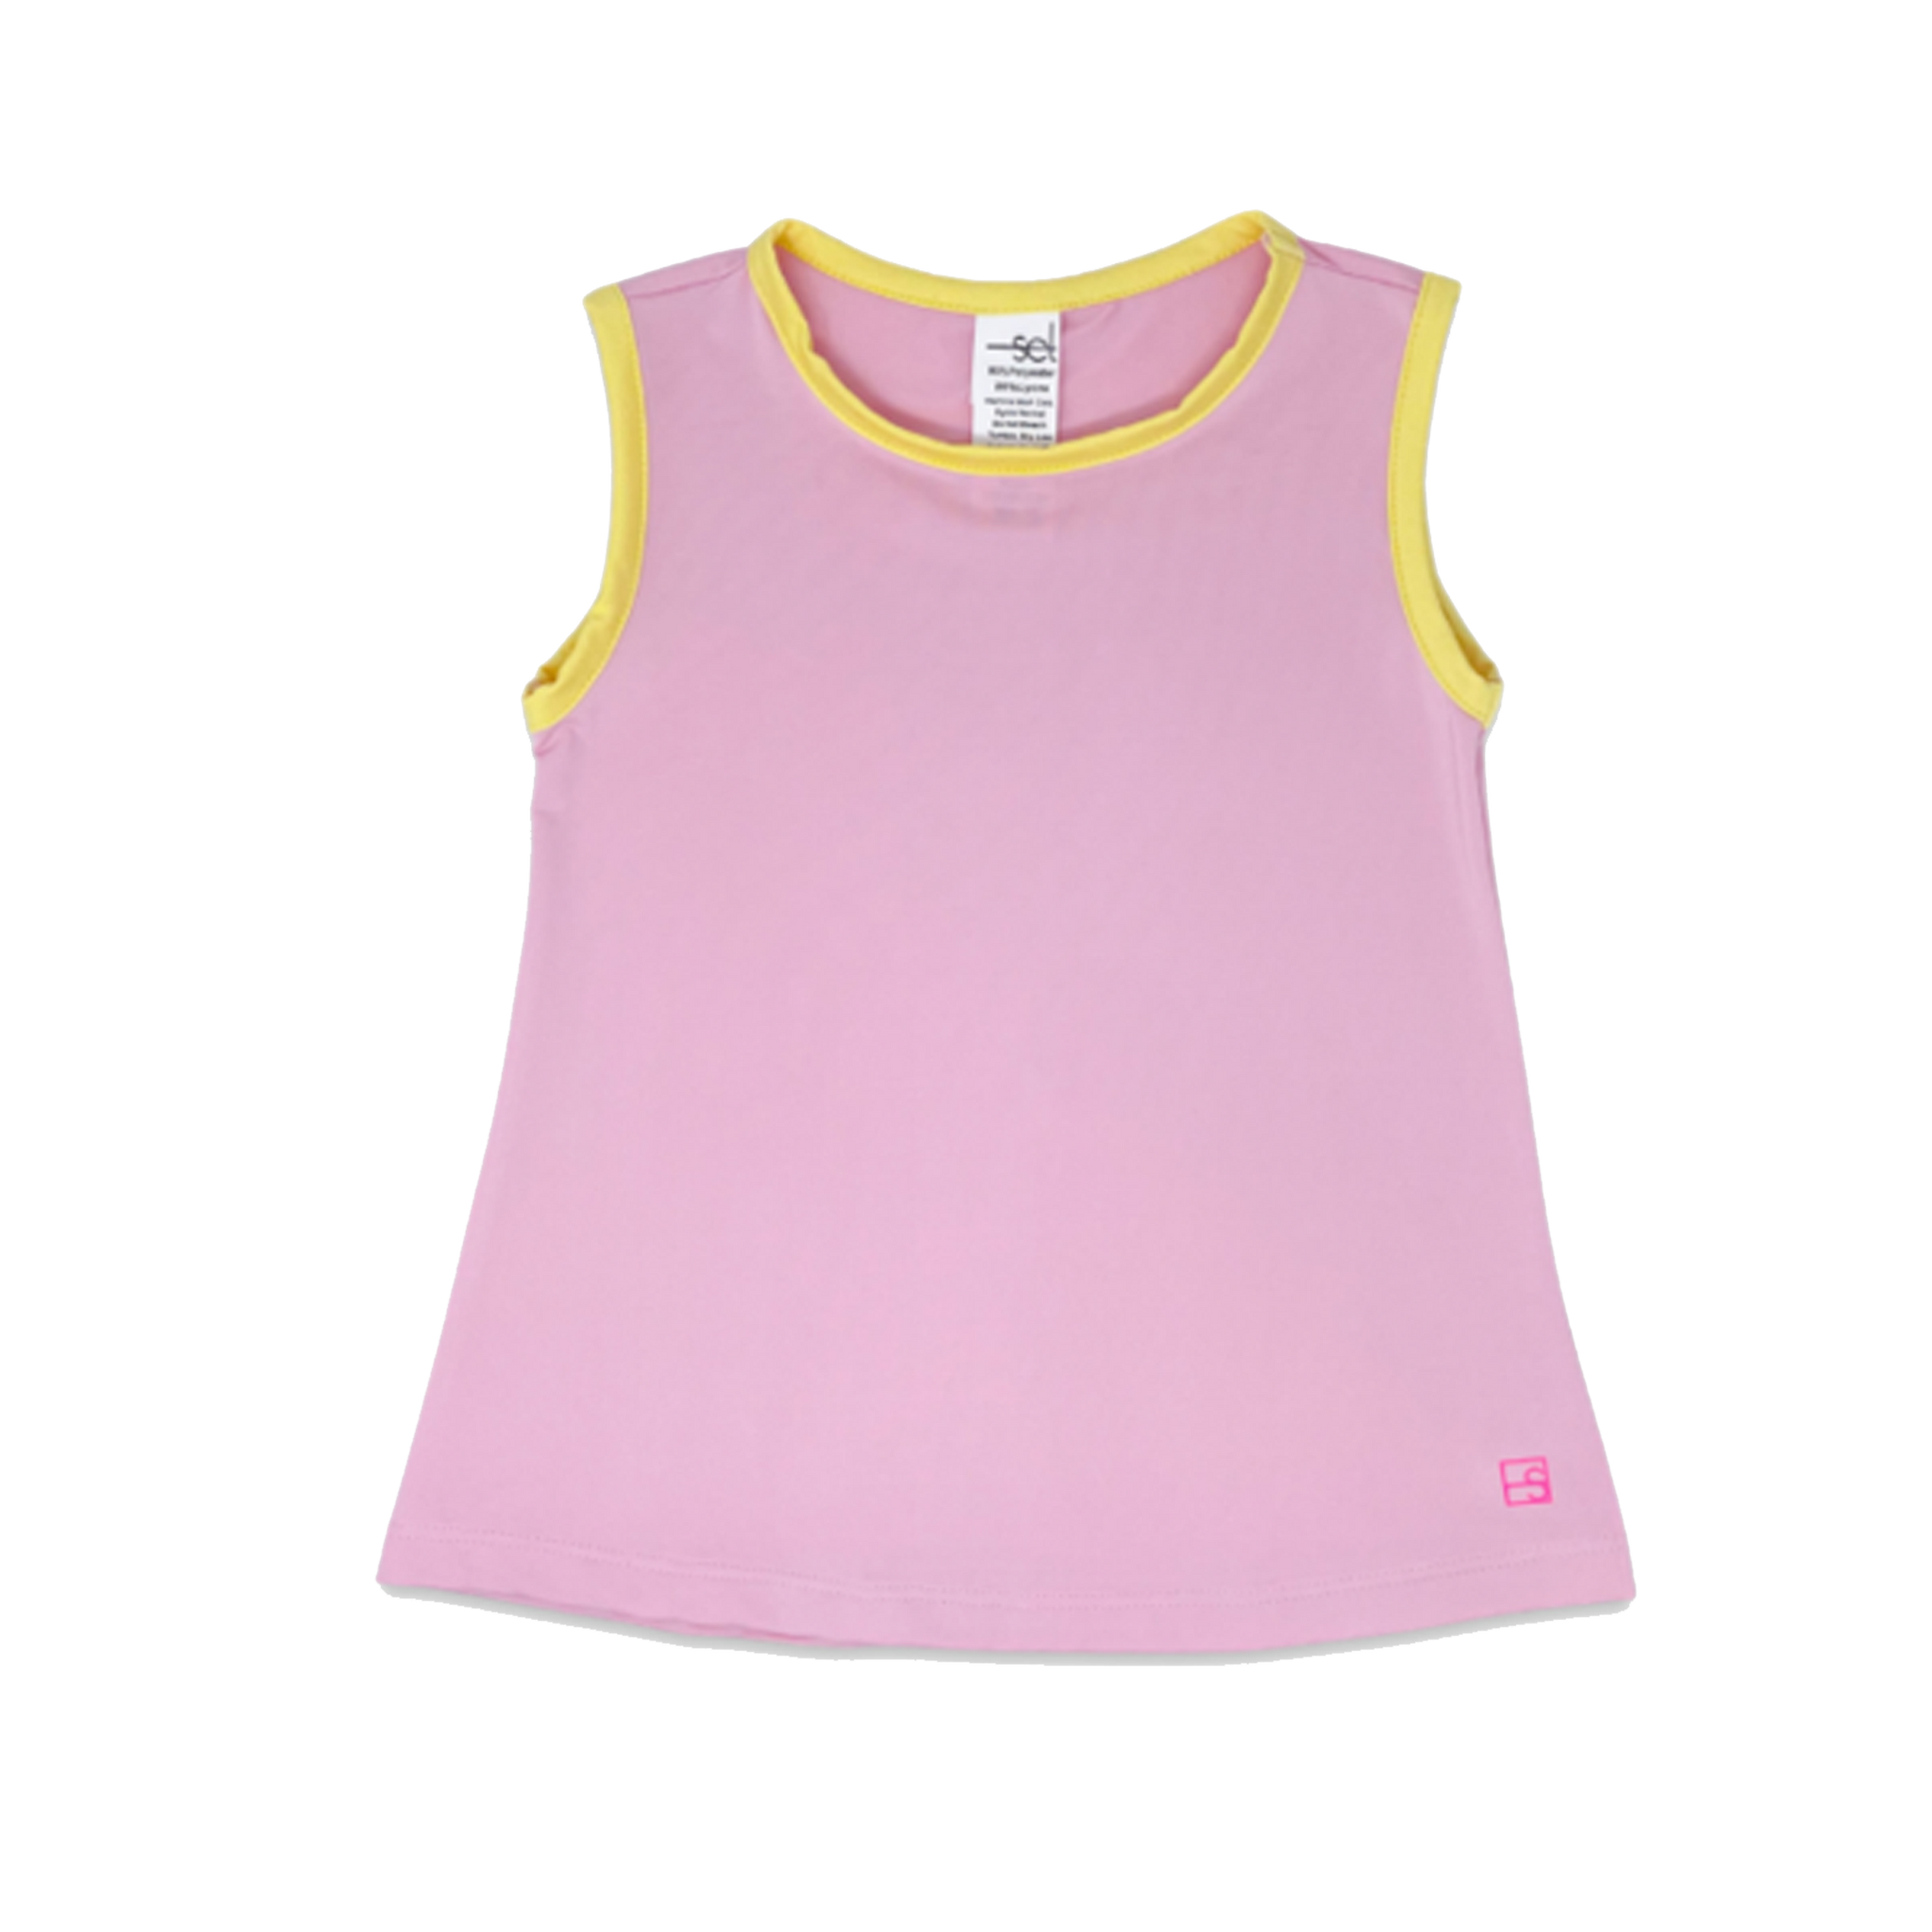 SET Tori Tank - Cotton Candy Pink/Yellow